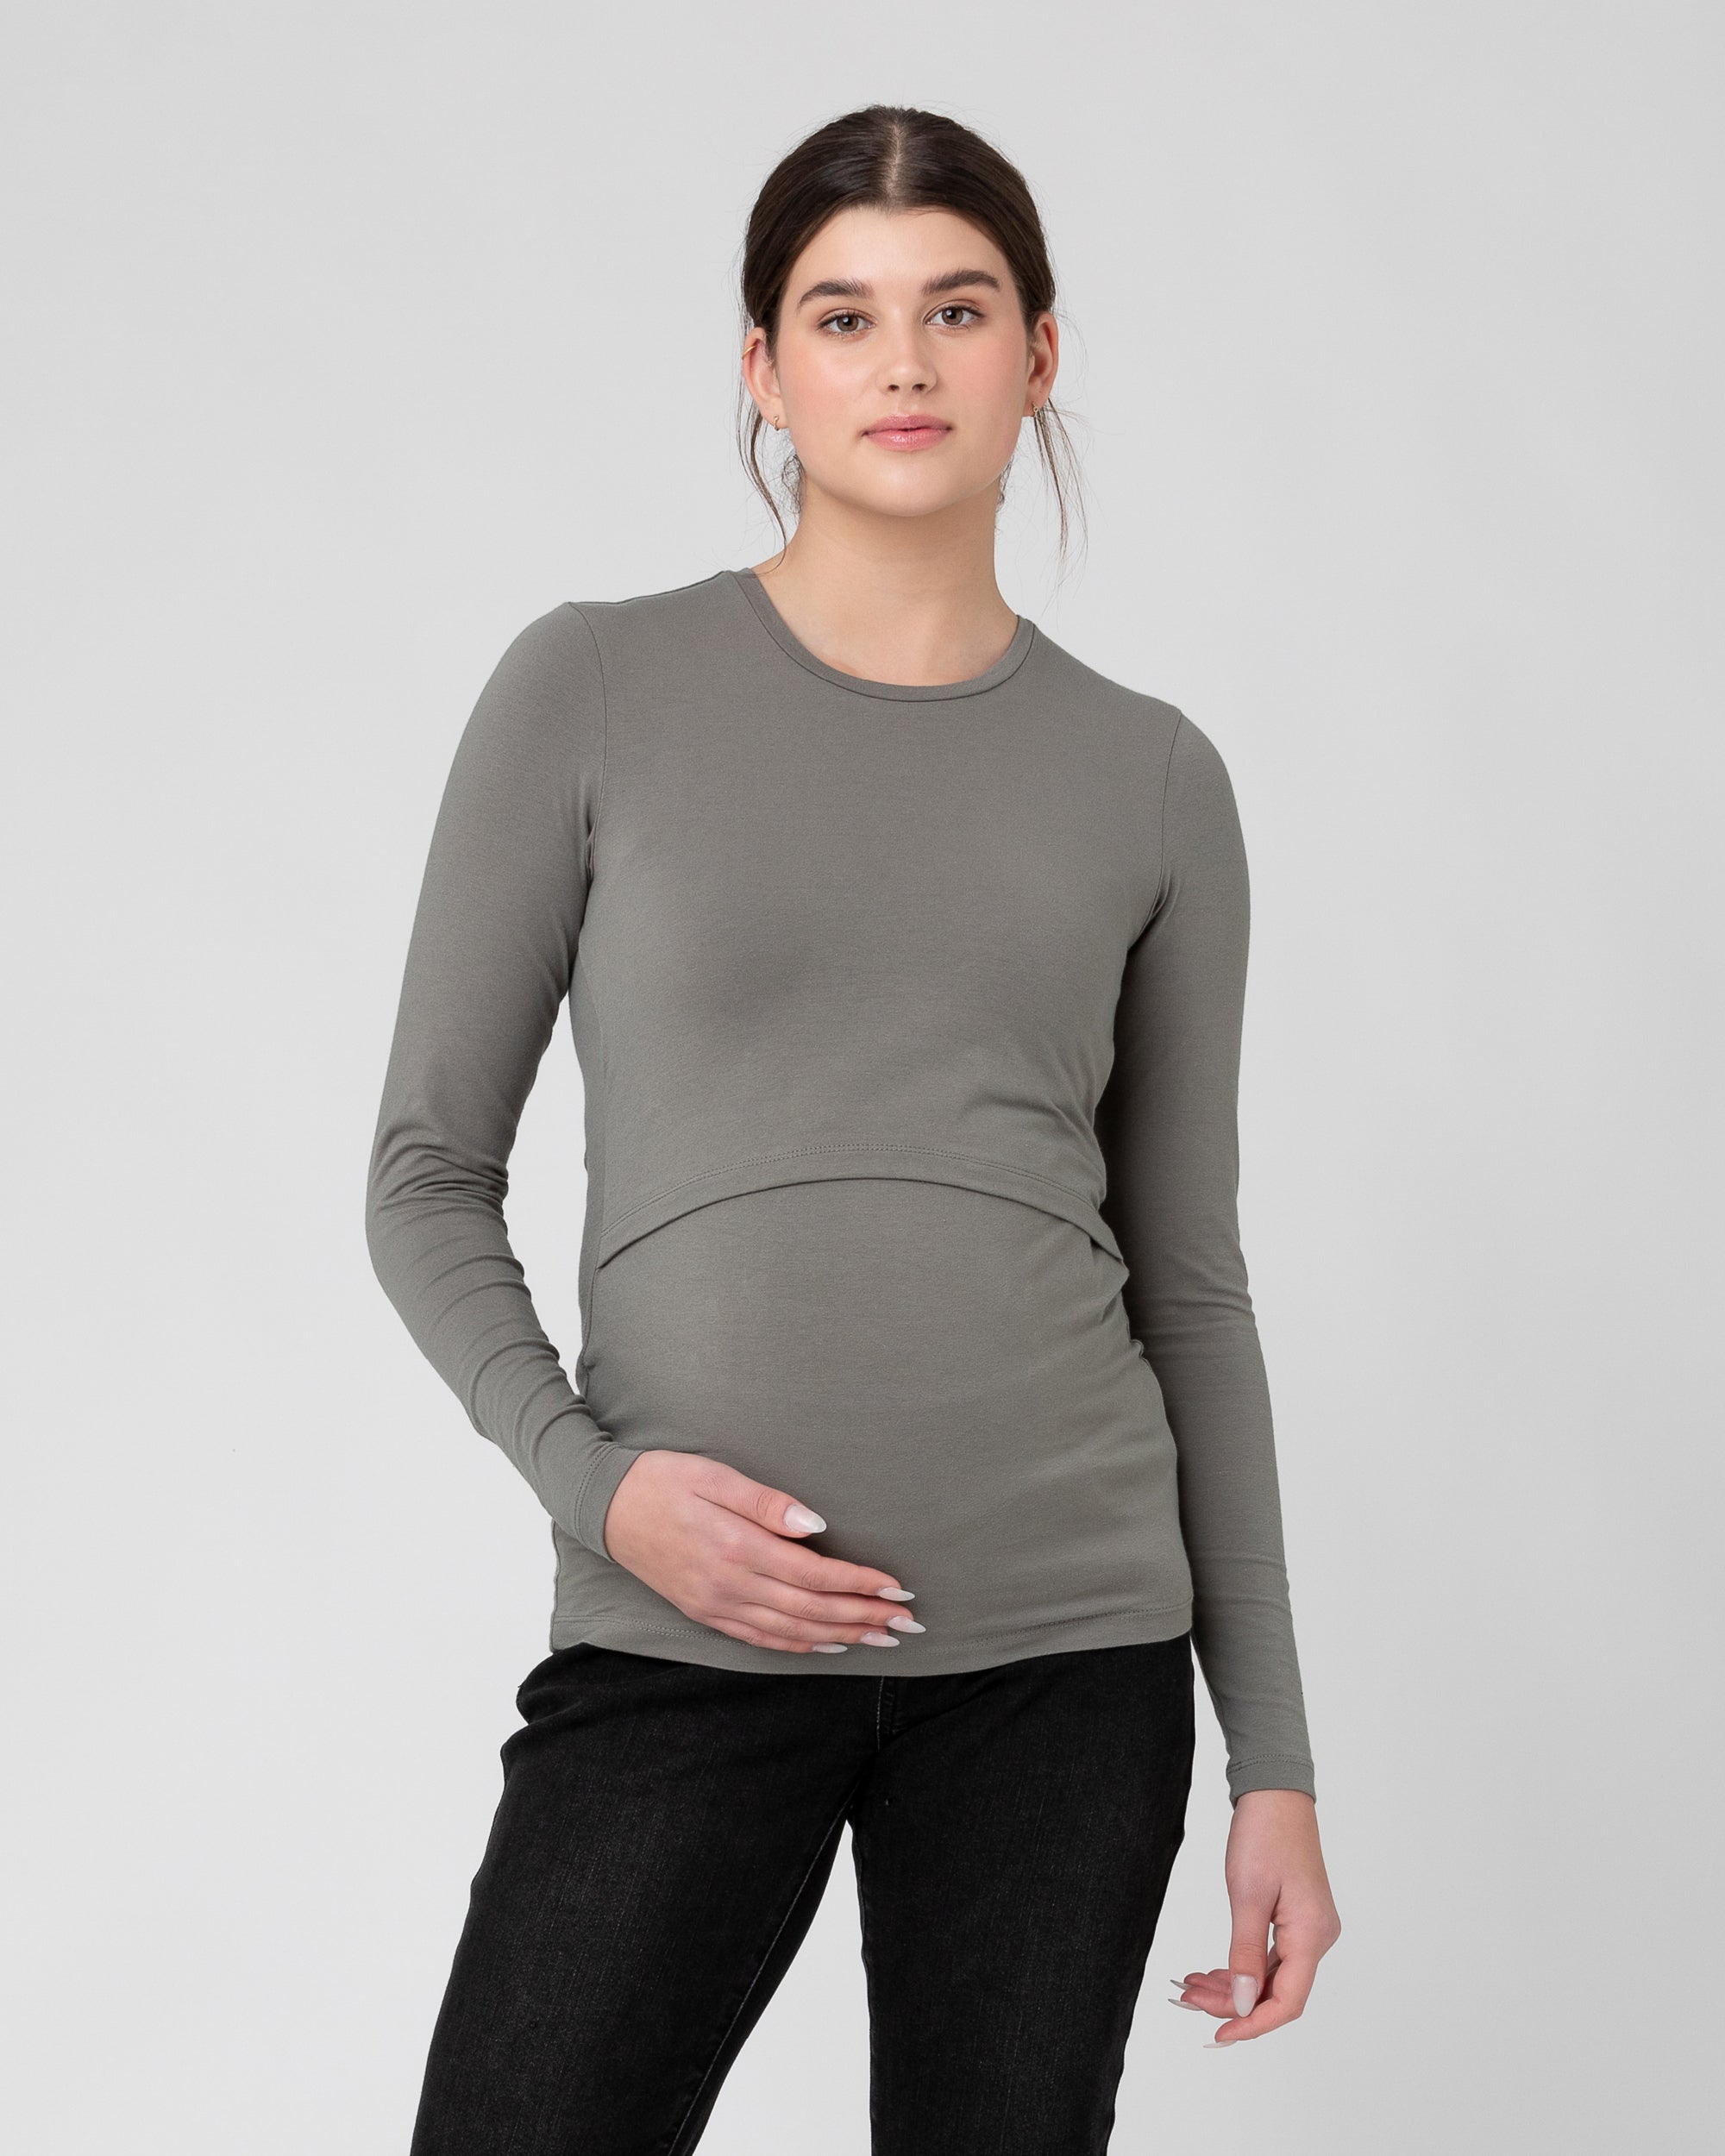 Cotton Stripe Maternity & Nursing Top